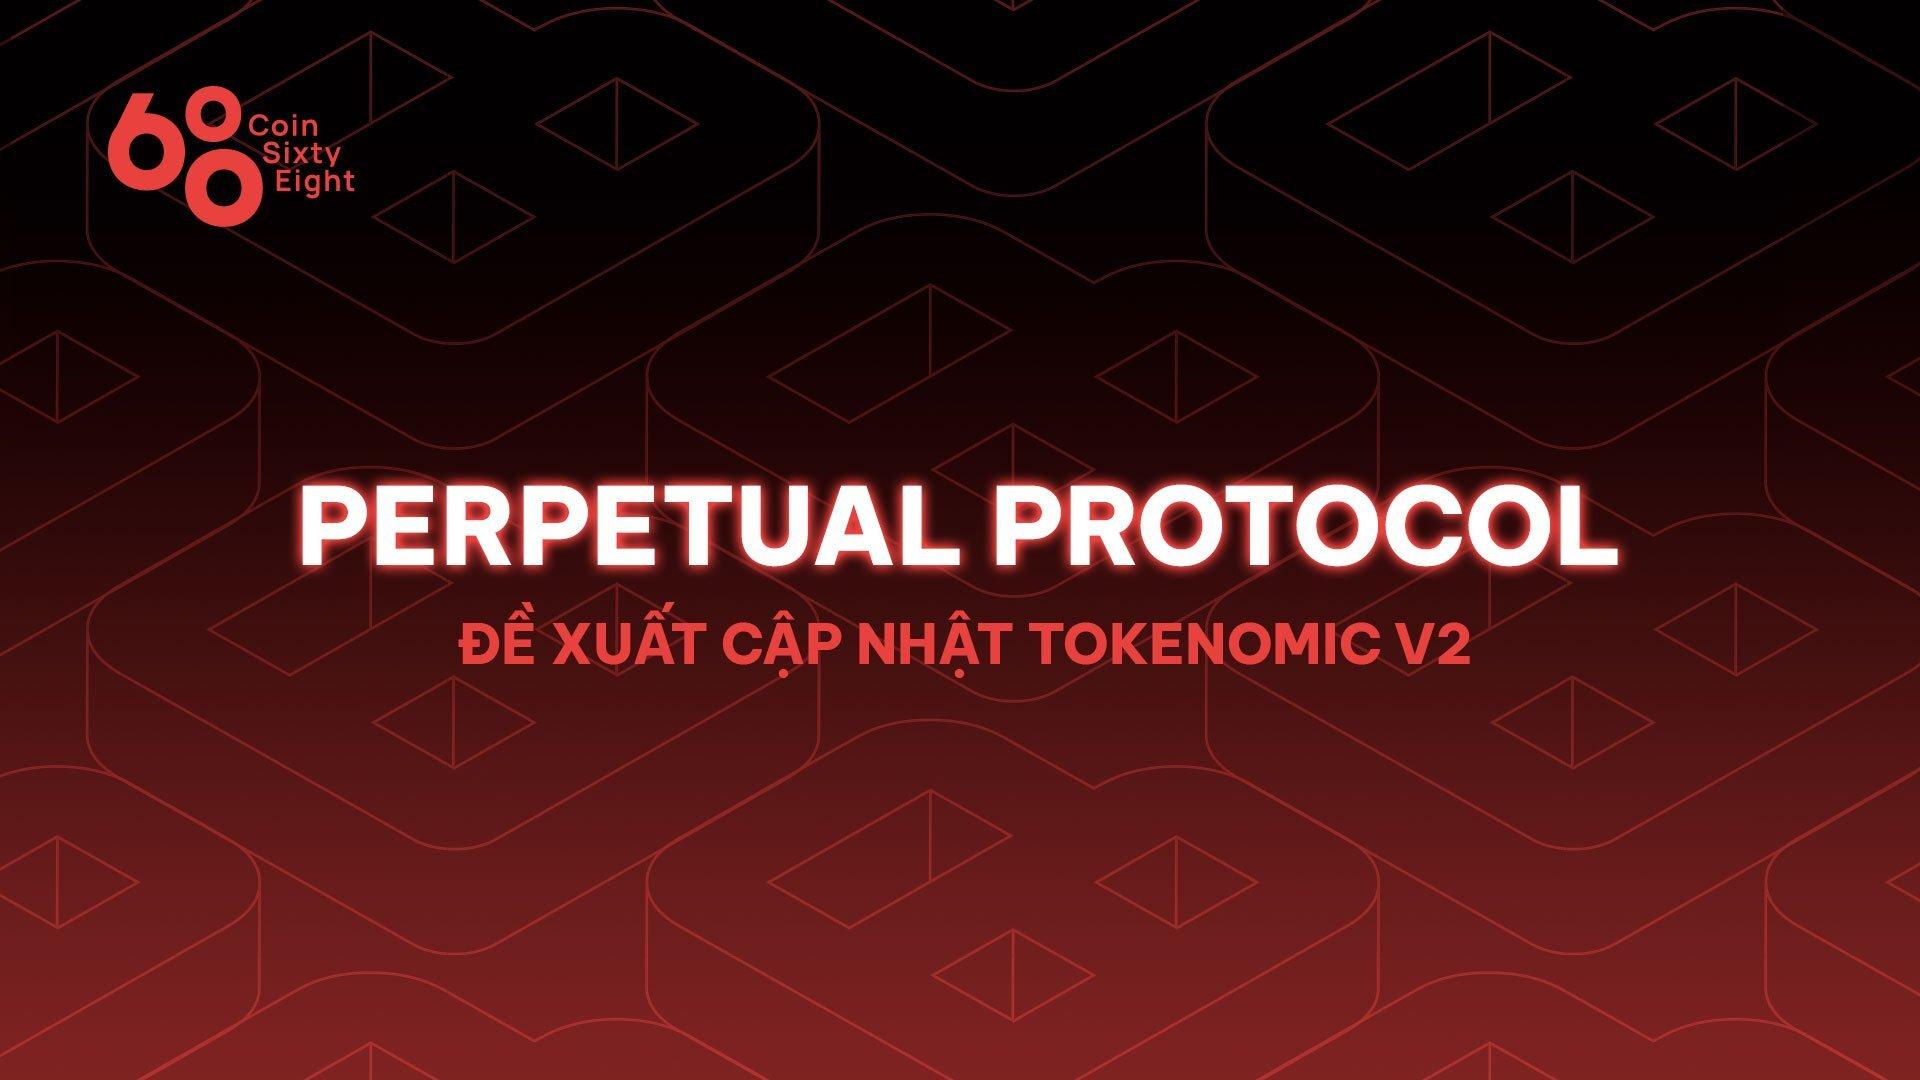 de-xuat-cap-nhat-tokenomic-v2-cua-perpetual-protocol